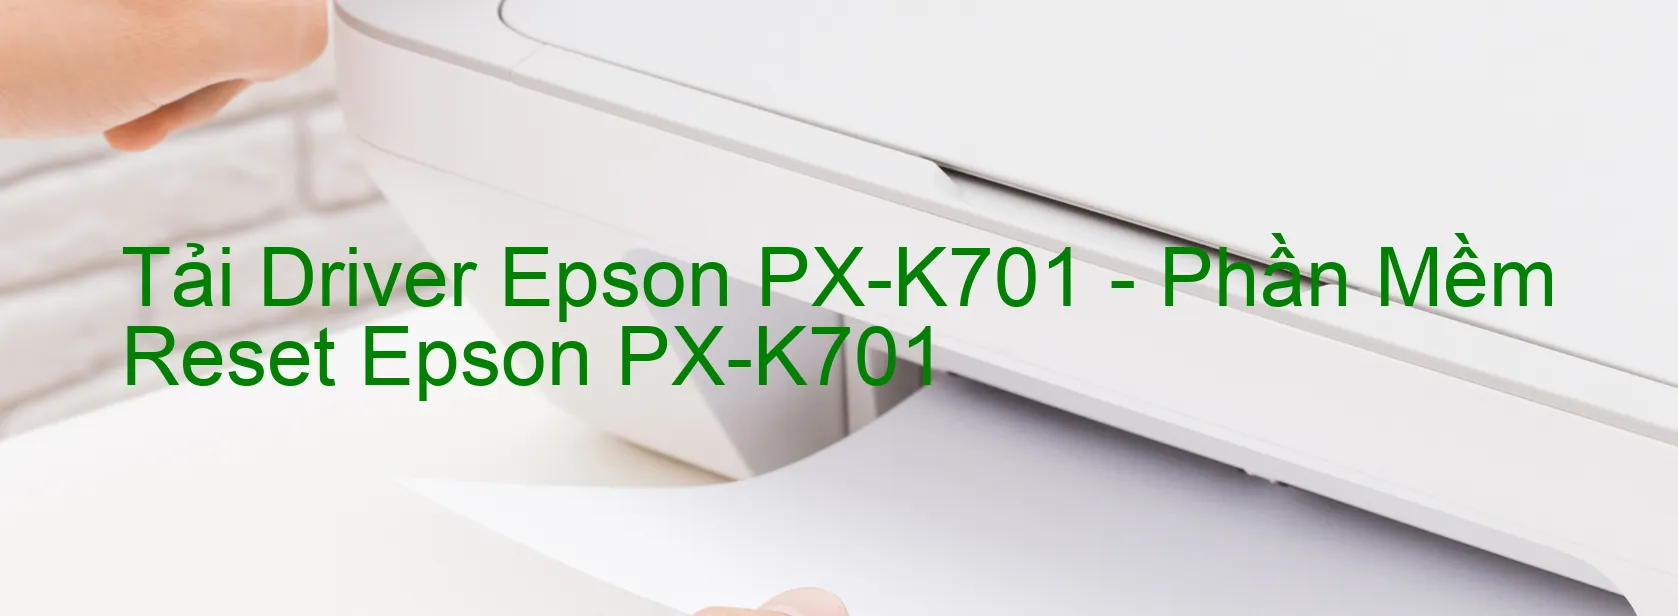 Driver Epson PX-K701, Phần Mềm Reset Epson PX-K701